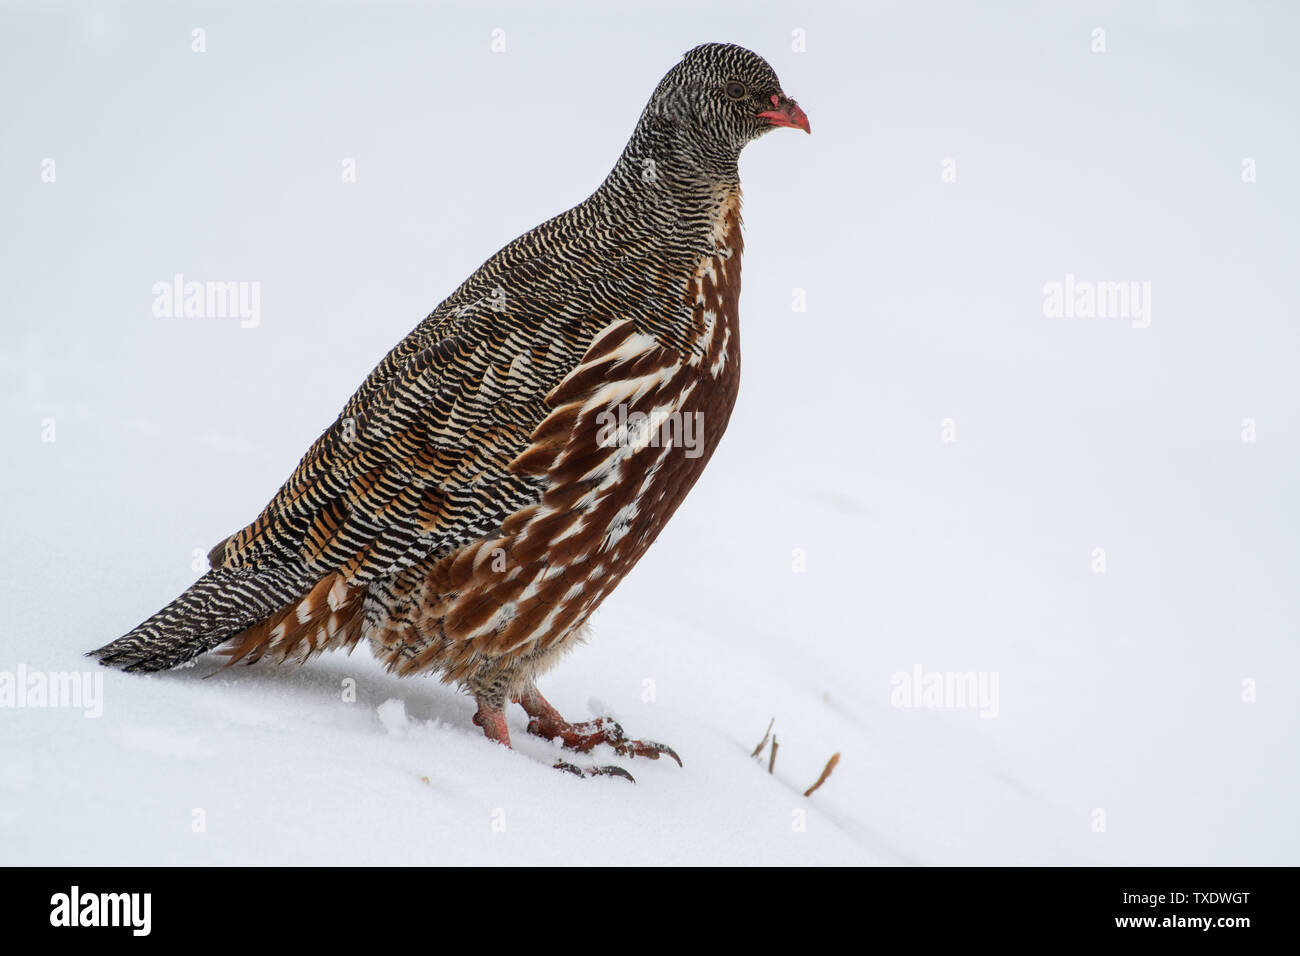 Snow Partridge bird sitting, Uttarakhand, India, Asia Stock Photo